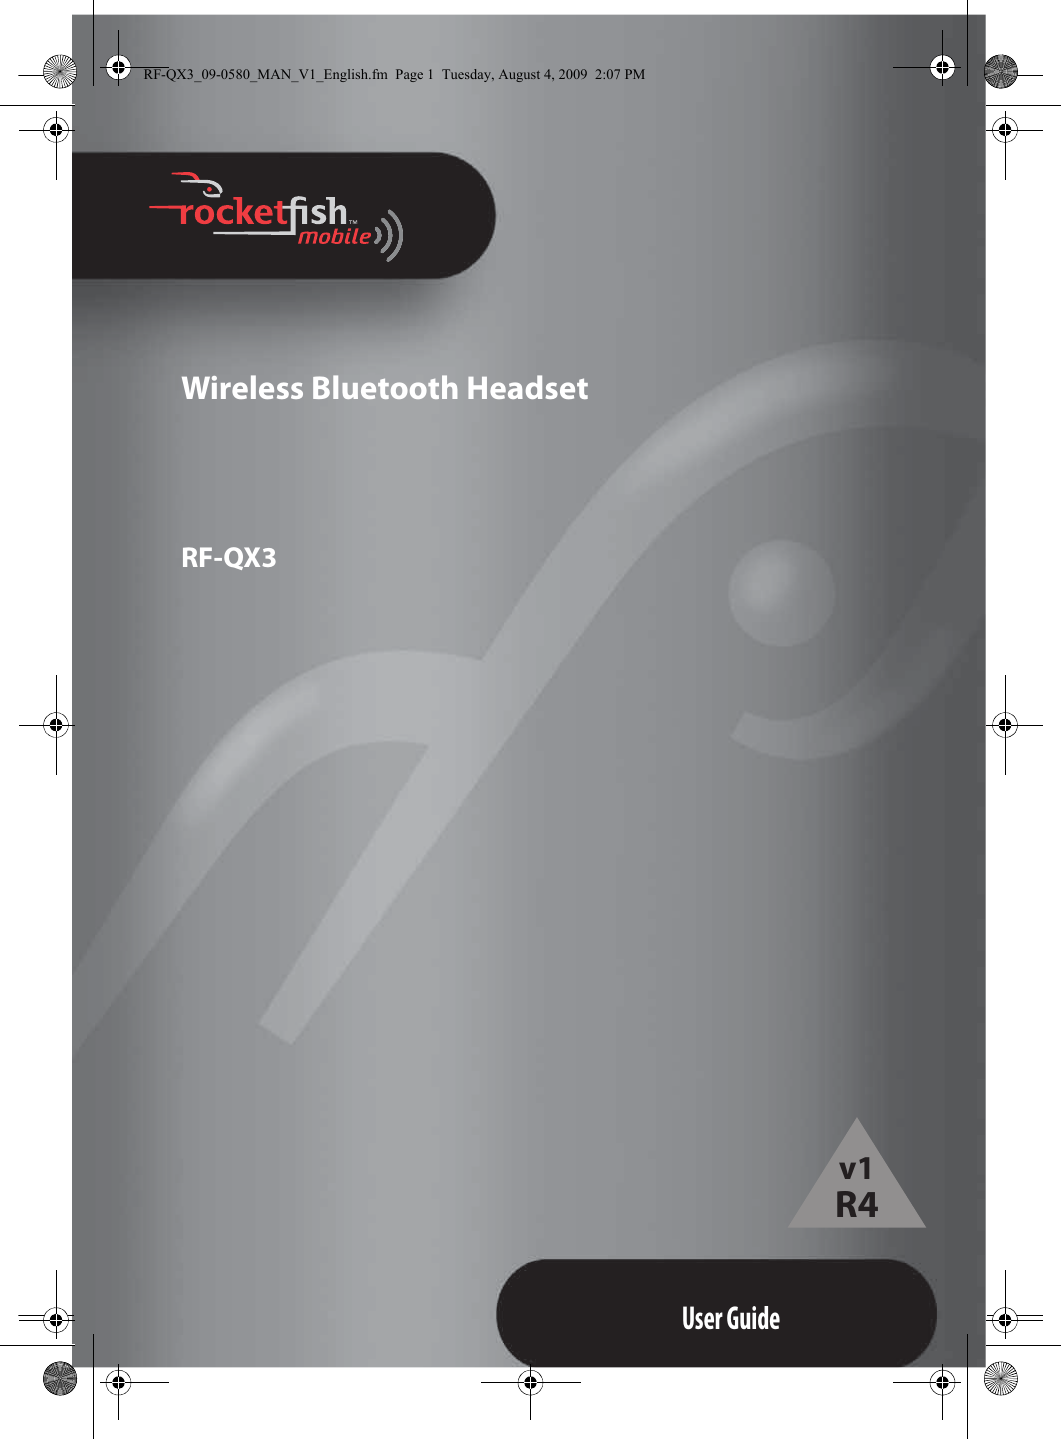 Wireless Bluetooth HeadsetRF-QX3User GuideRF-QX3_09-0580_MAN_V1_English.fm  Page 1  Tuesday, August 4, 2009  2:07 PMv1R4